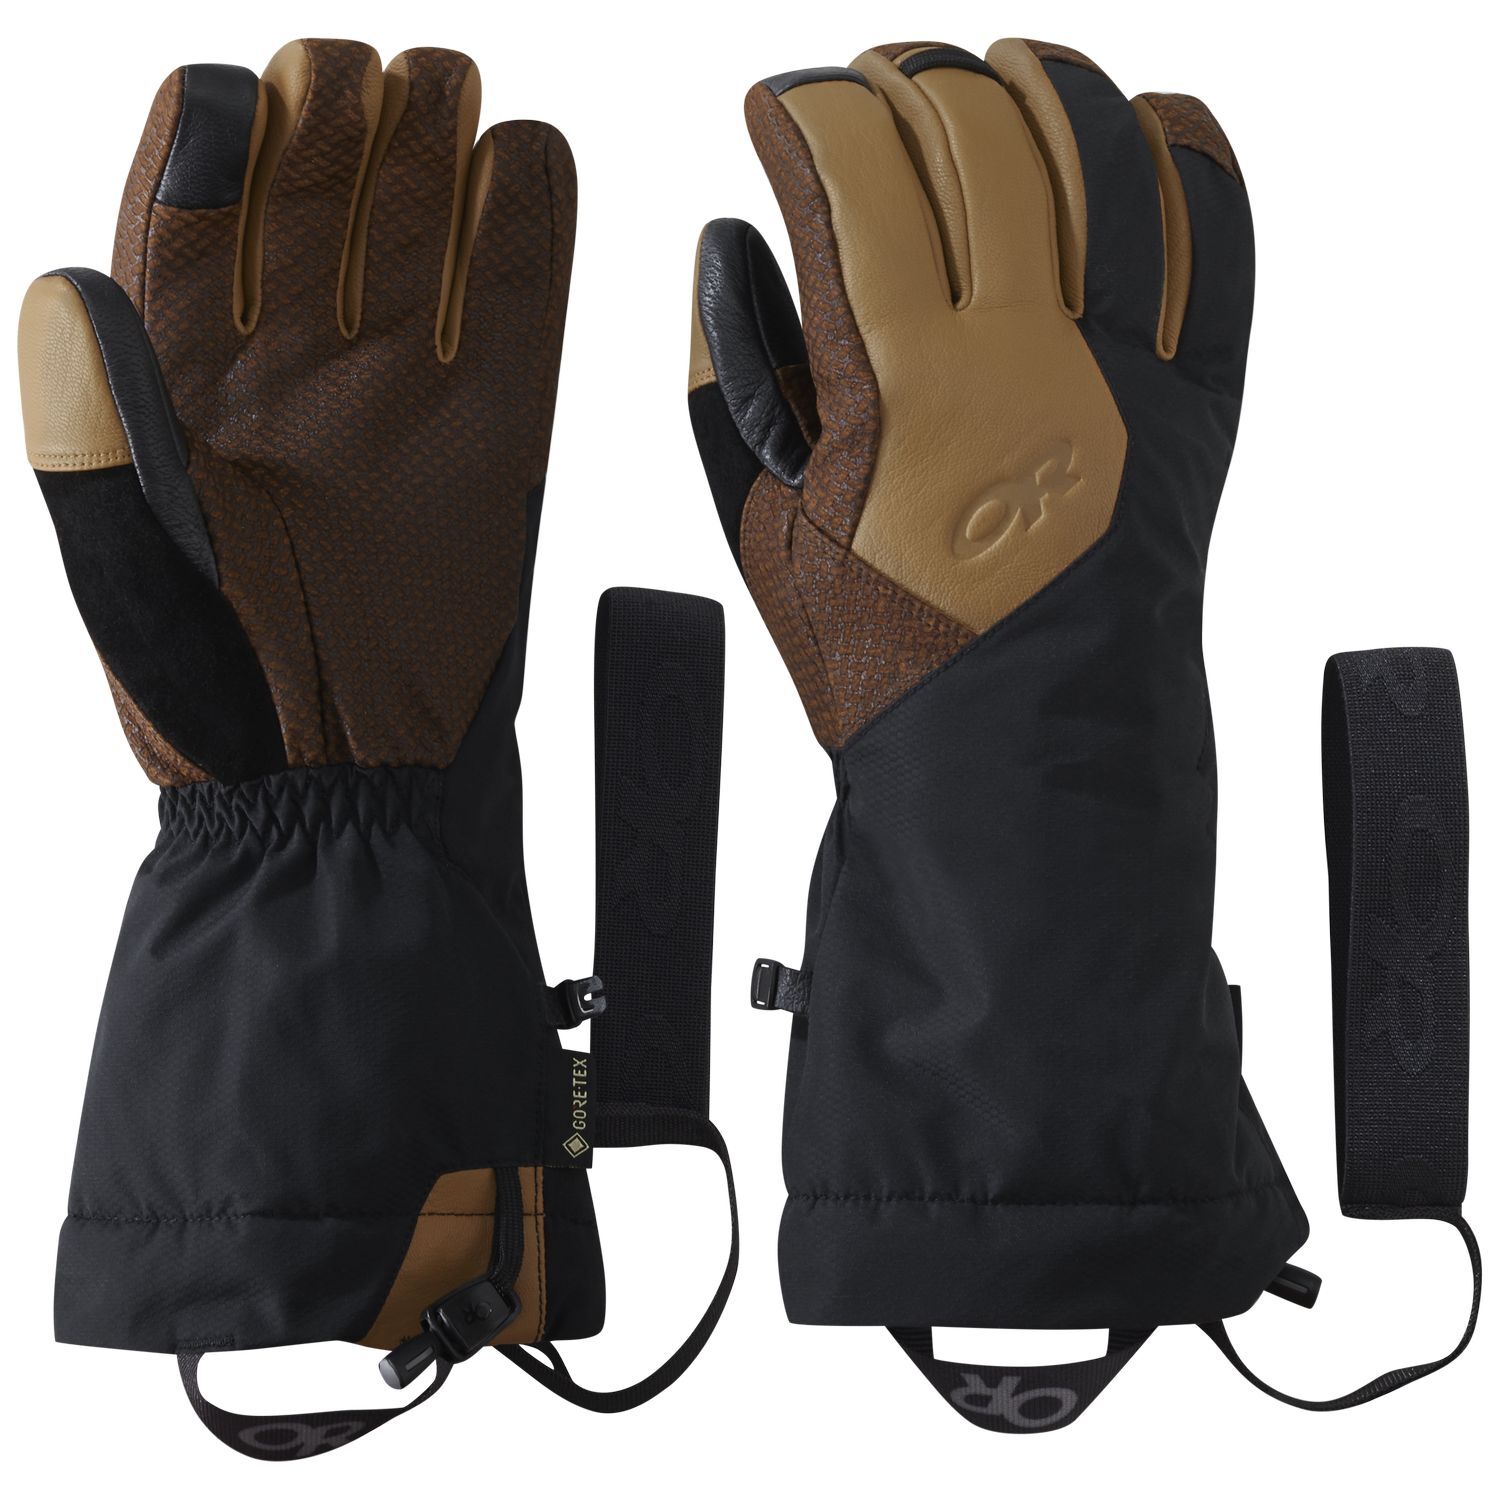 Outdoor Research Super Couloir SensGloves - Ski gloves - Men's